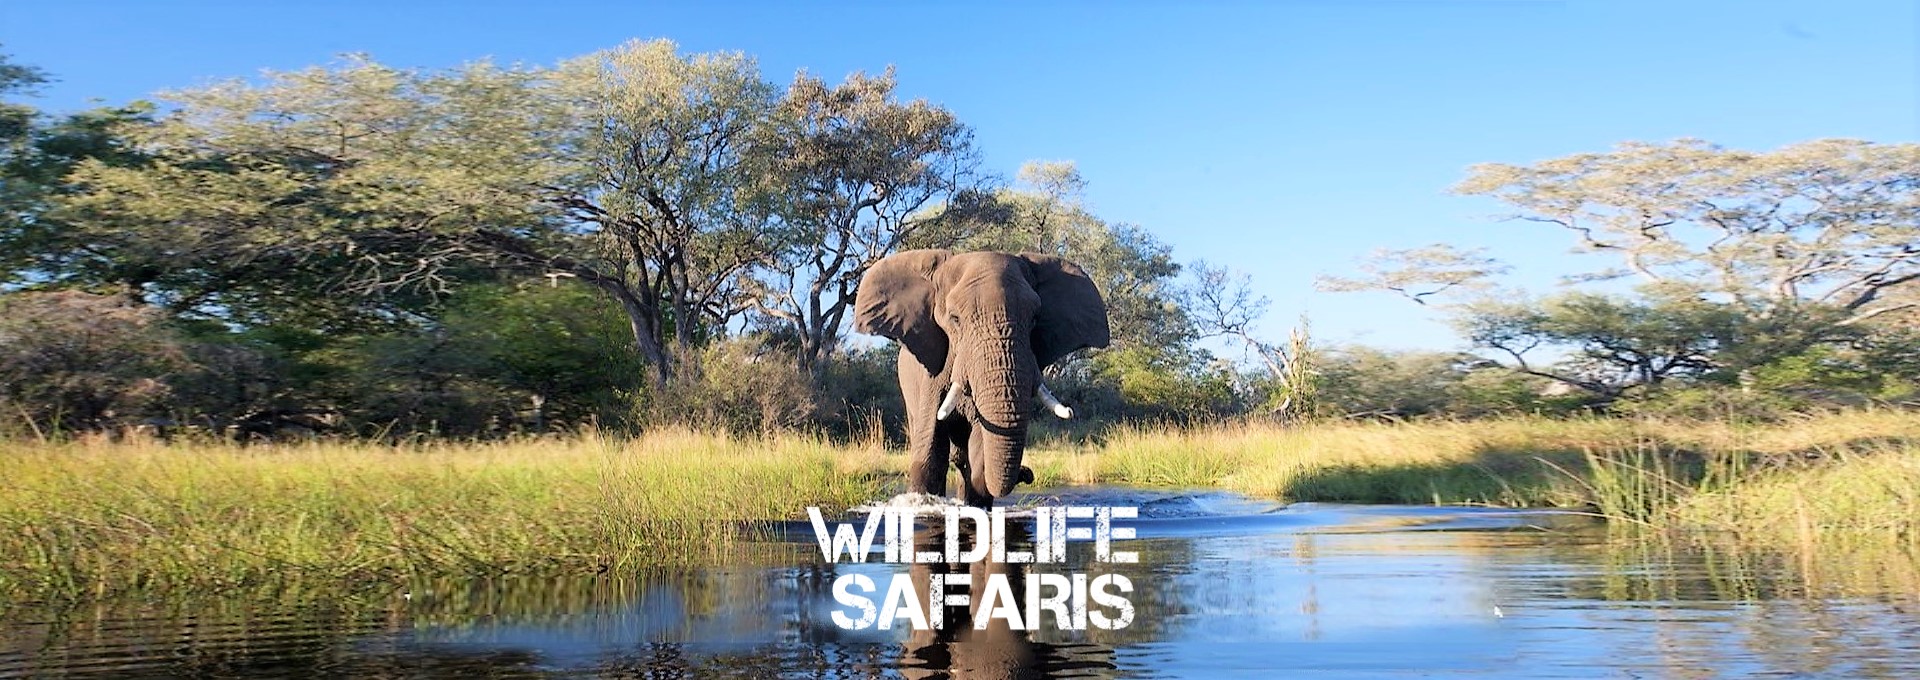 african wildlife safari san antonio